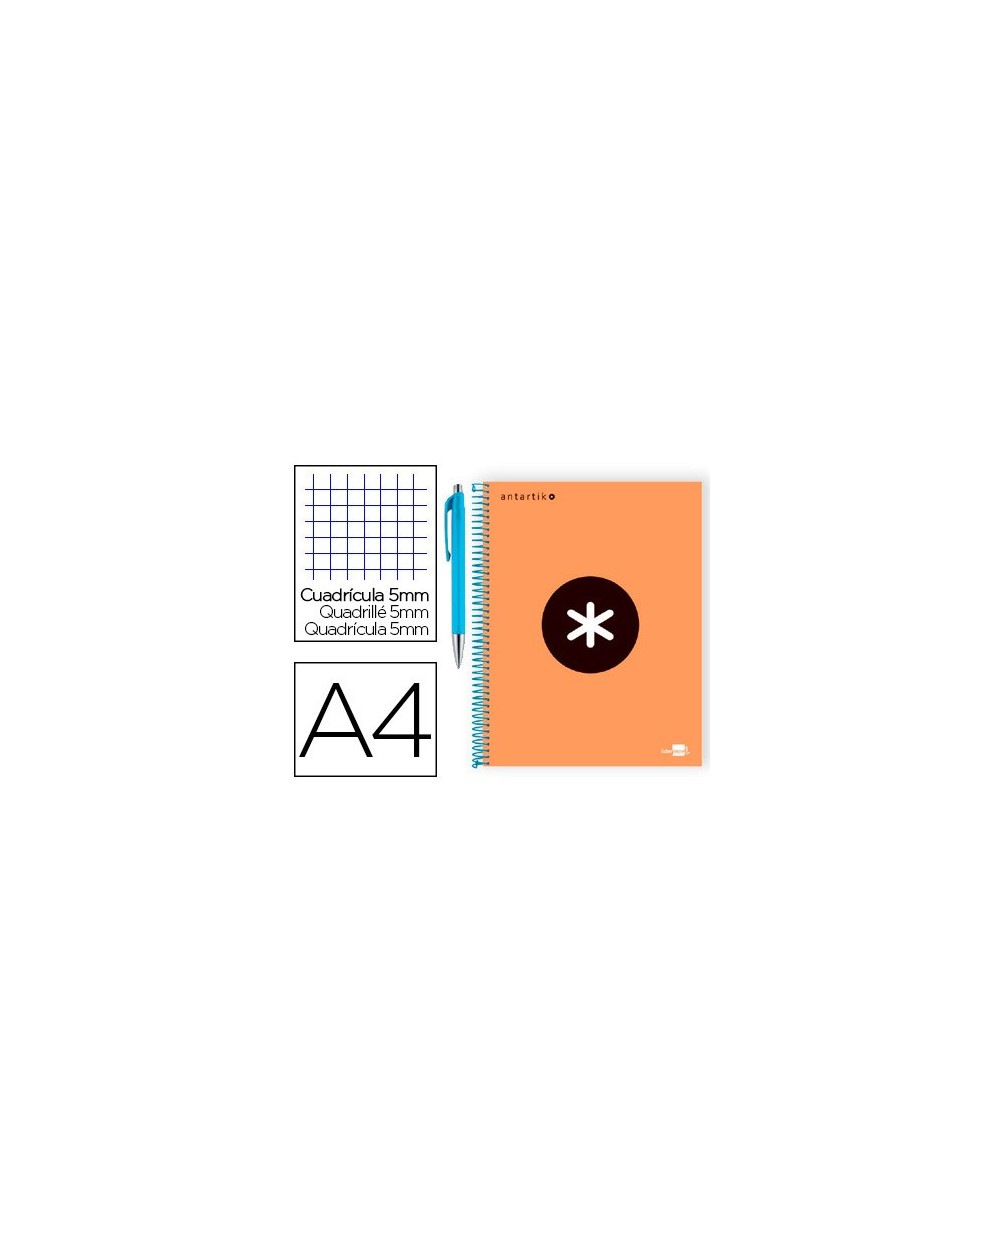 Cuaderno espiral liderpapel a4 micro antartik tapa forrada 120 h 100g cuadro 5 mm color naranja promo caran d ache